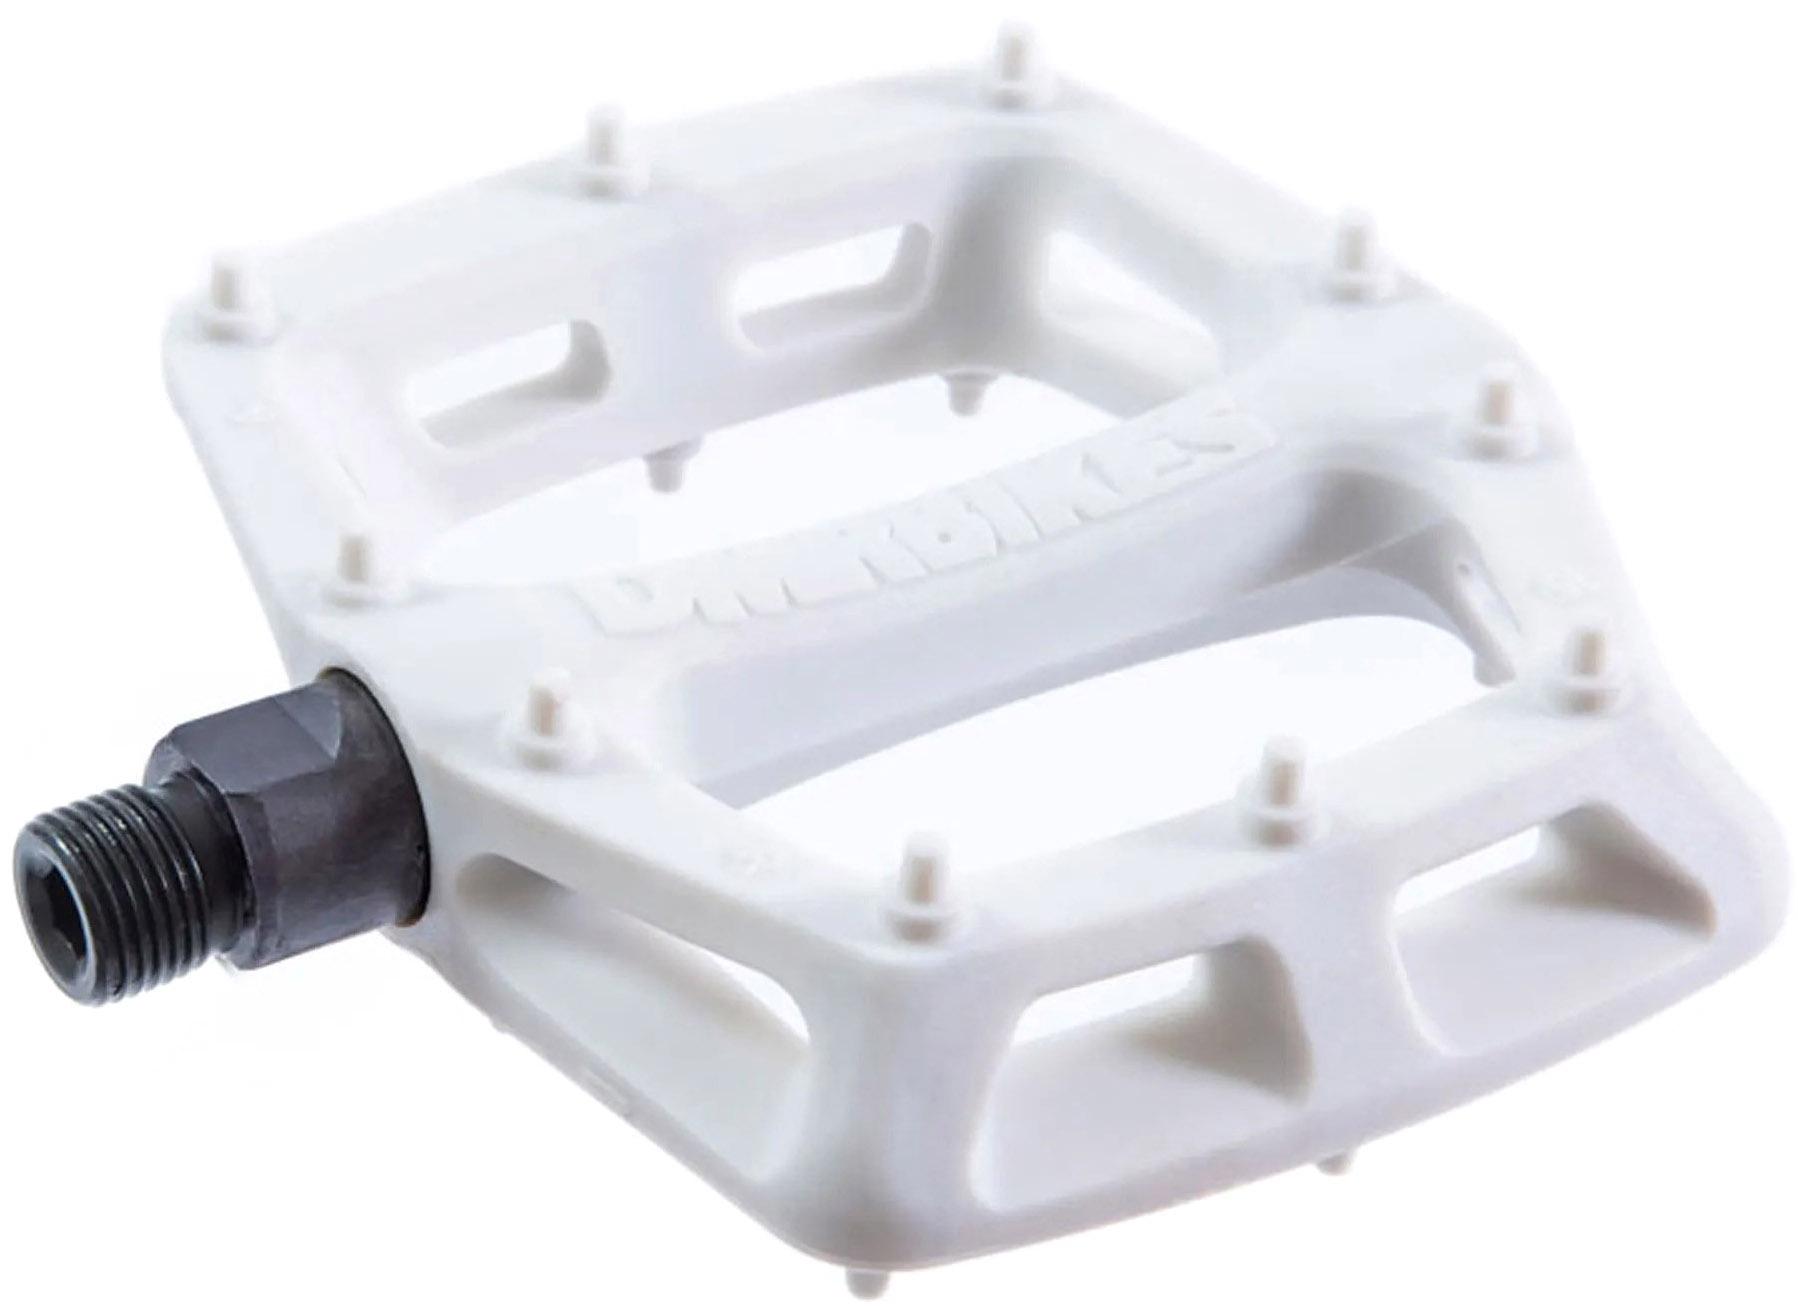 Dmr V6 Plastic Flat Pedals - White